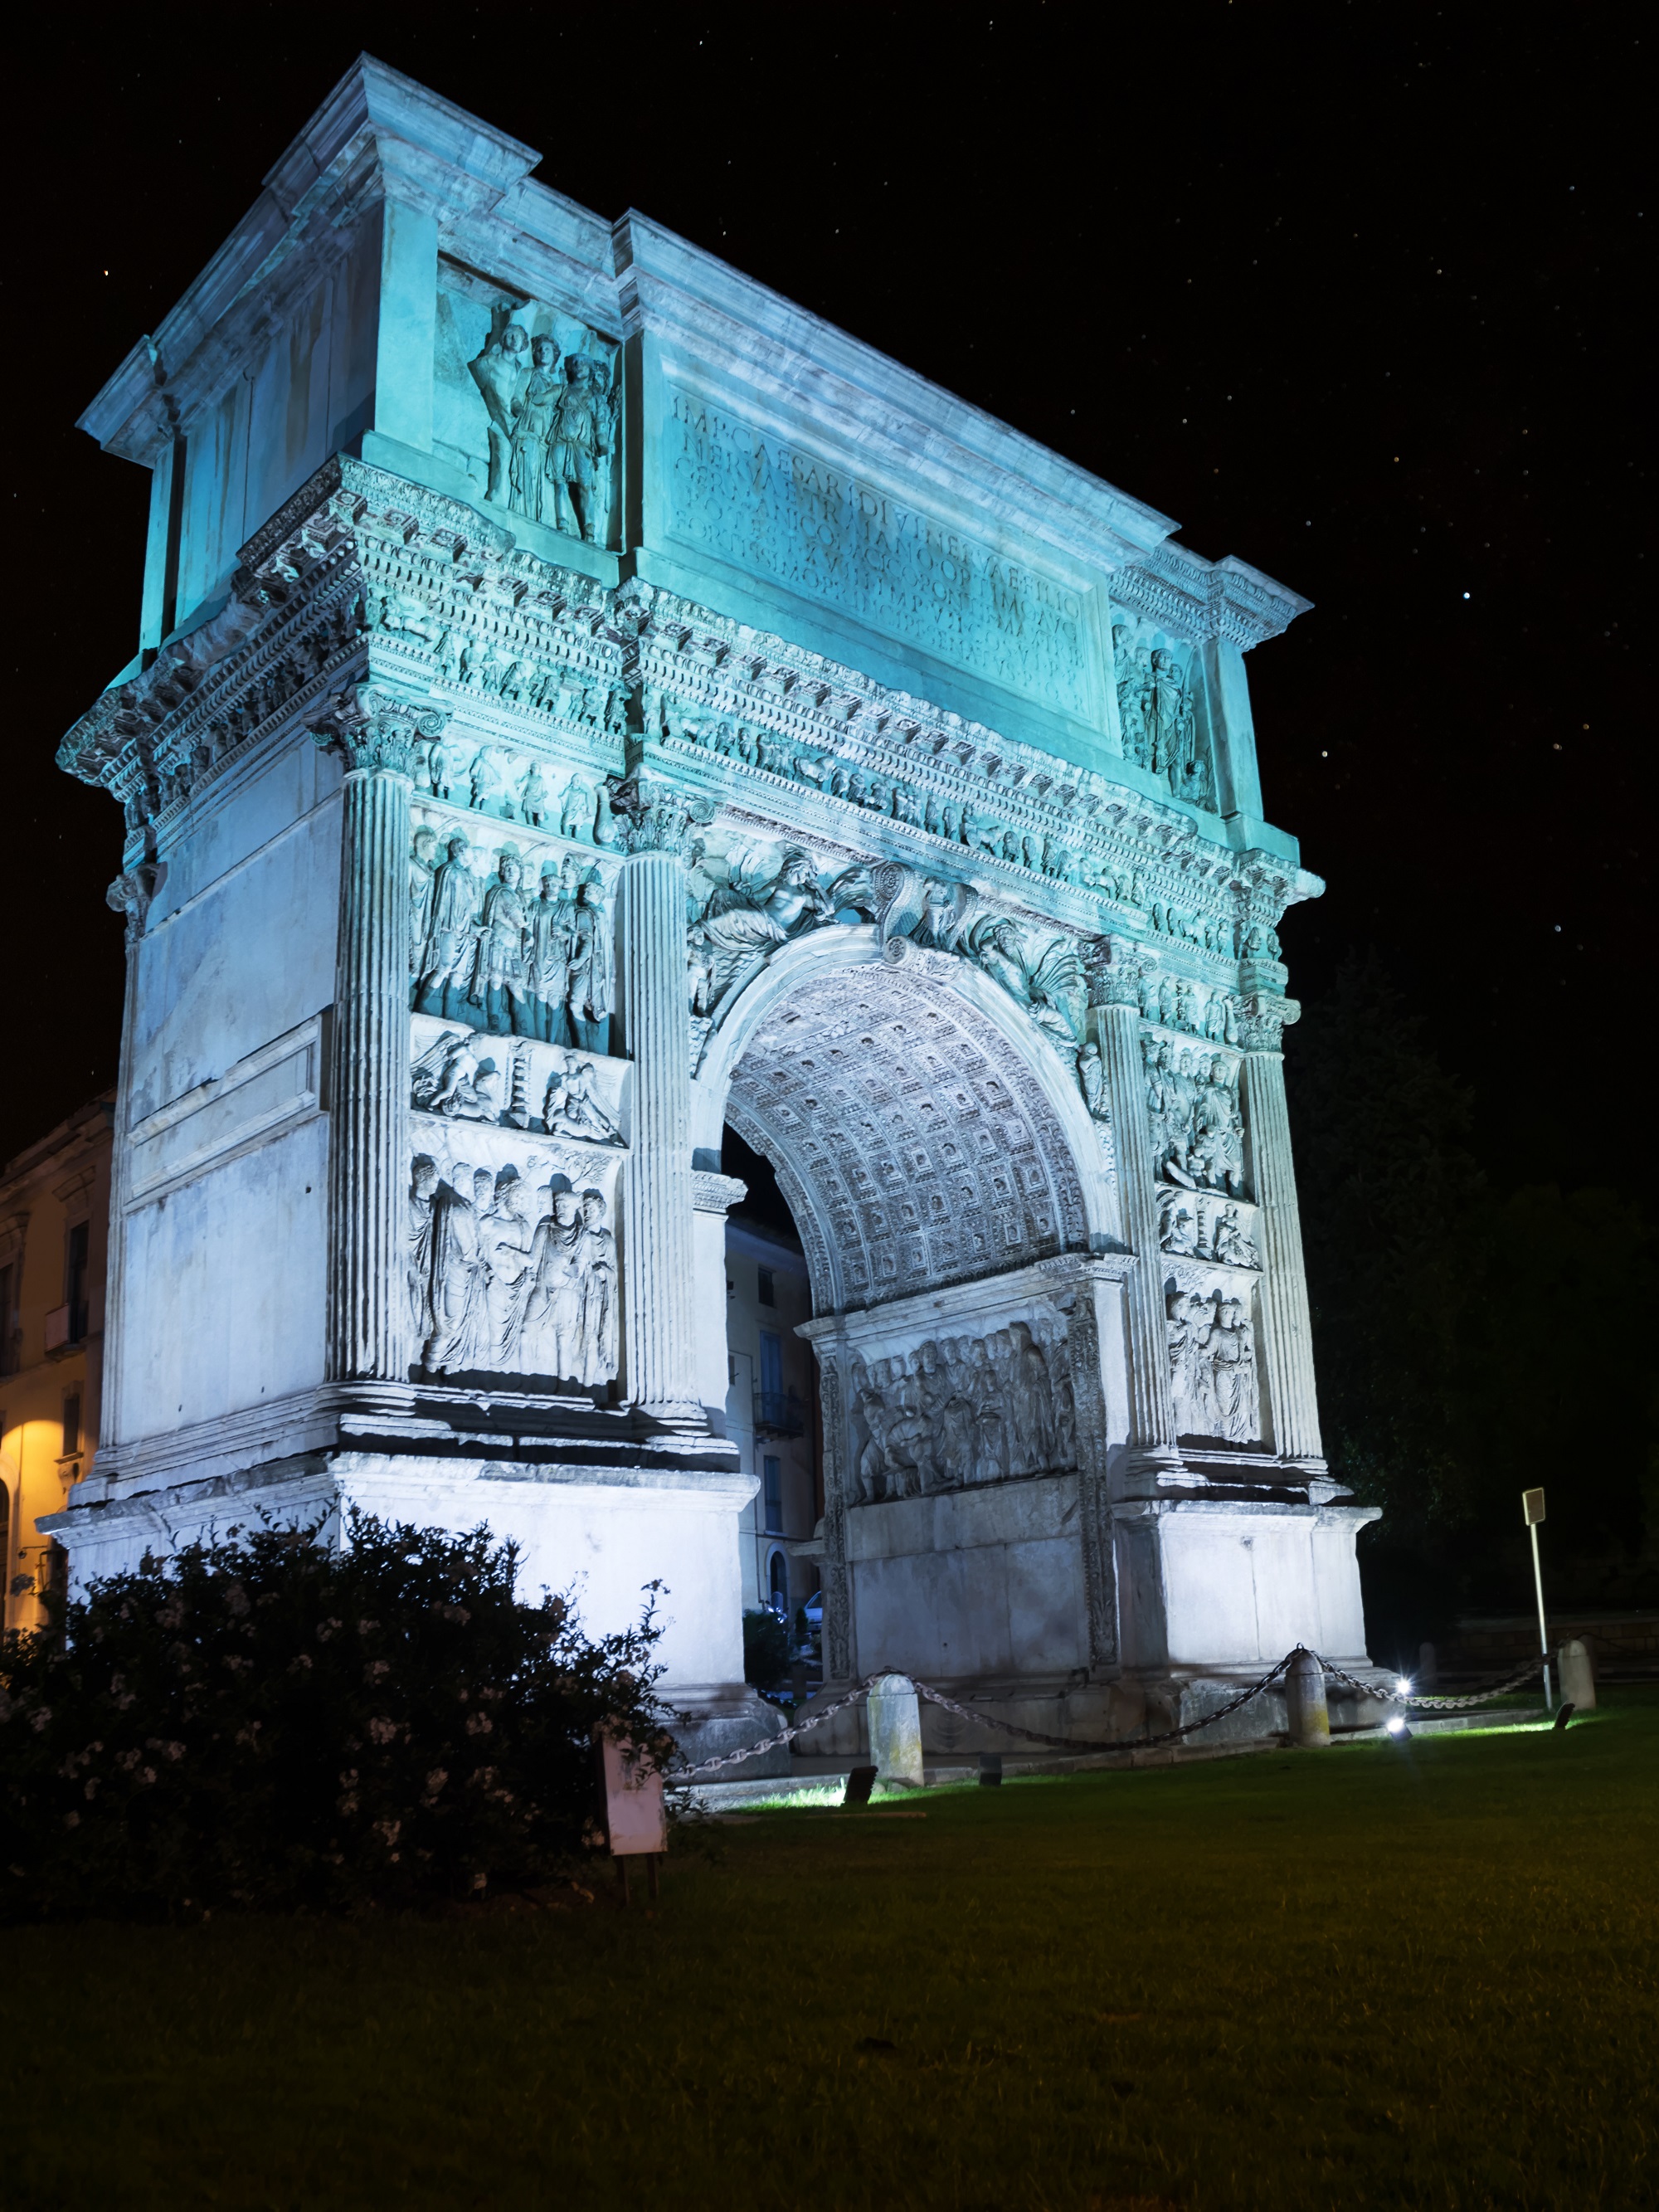 Arco di Traiano domenica si illuminerà di blu turchese e lunedì di verde